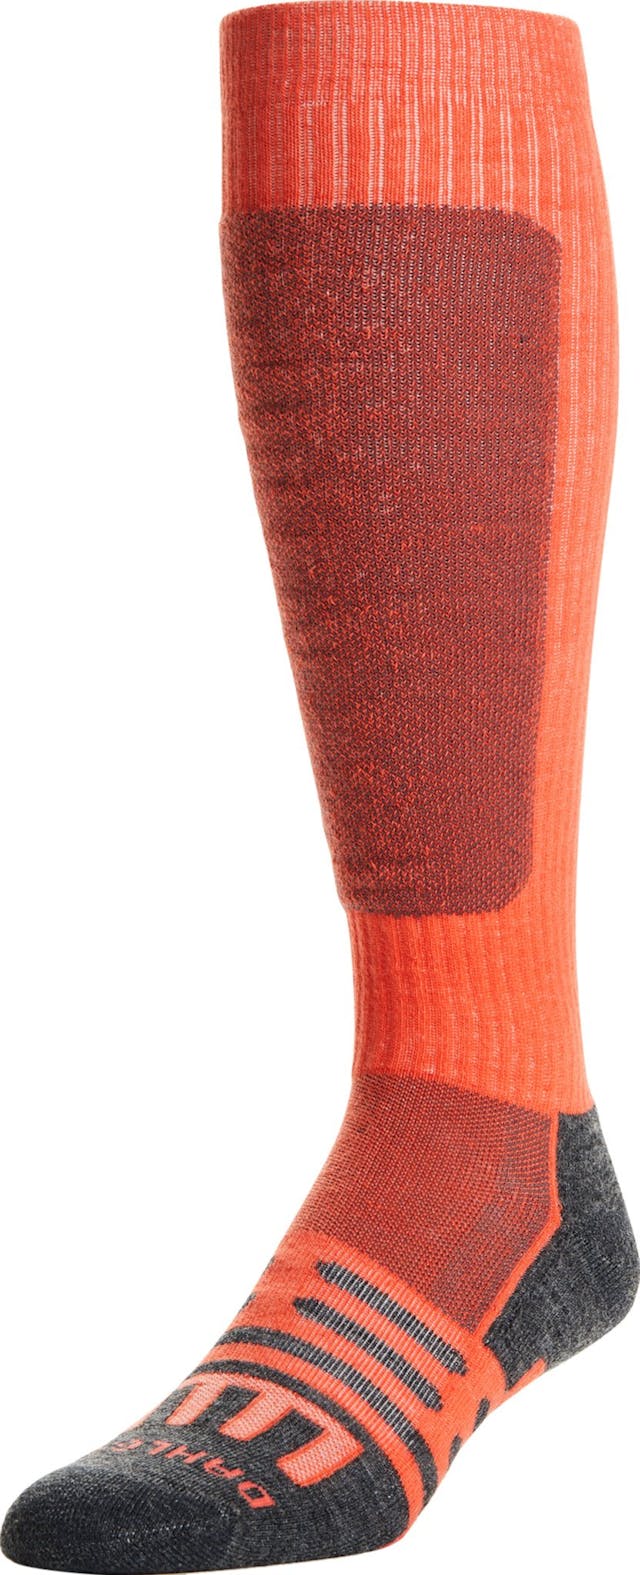 Product image for Slope Merino Sock - Unisex